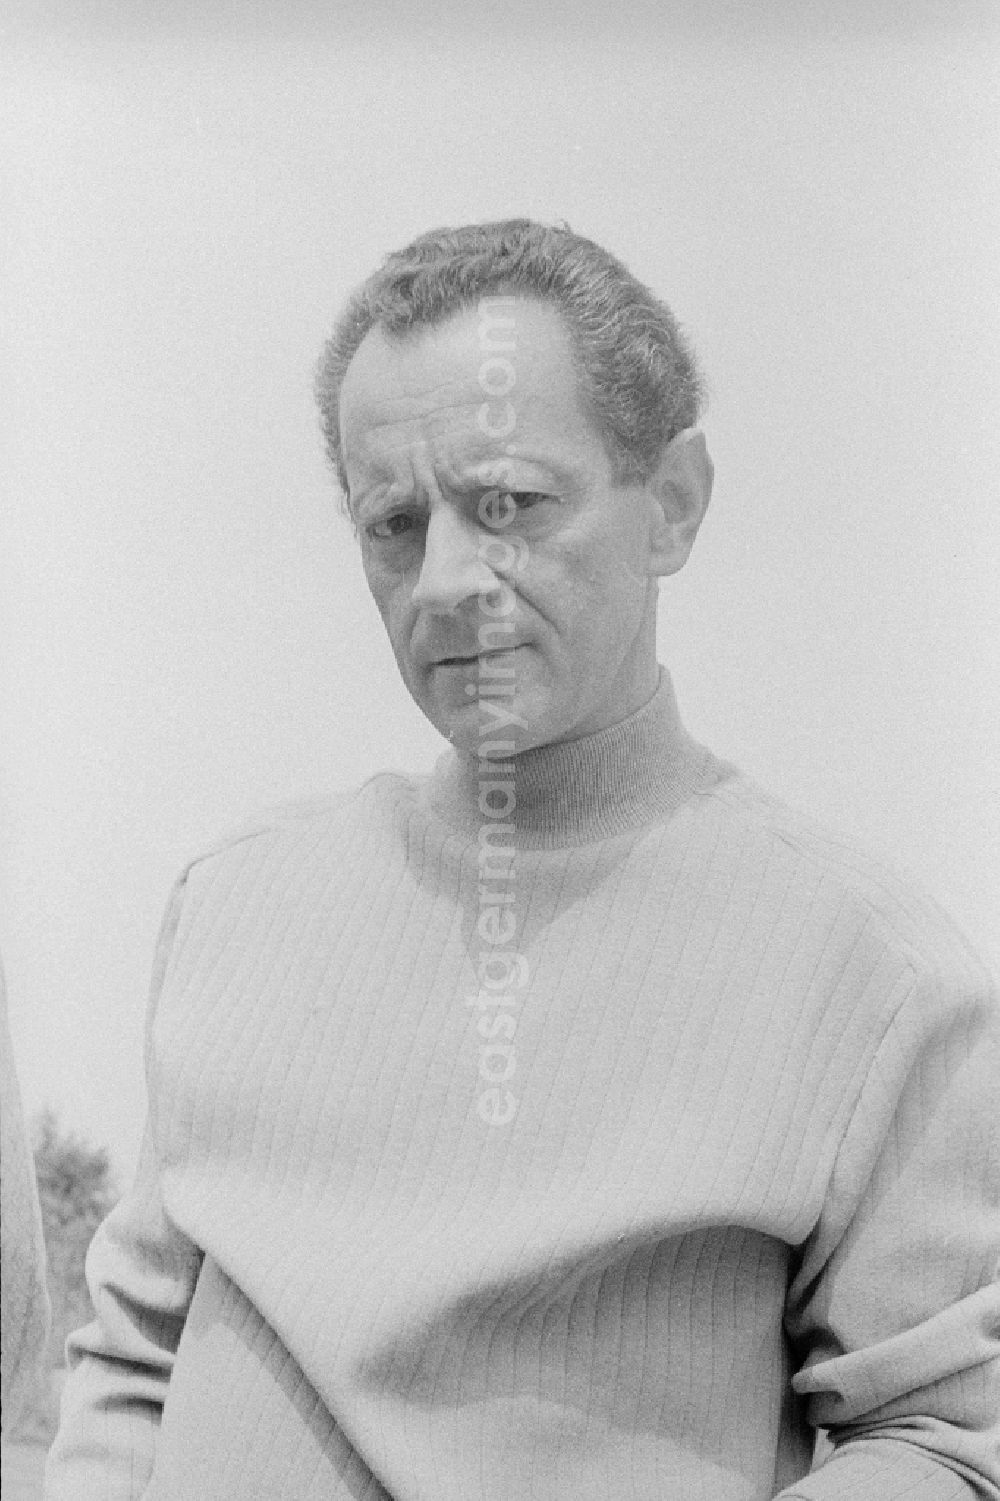 GDR picture archive: Zeuthen - The author Dieter Noll (1927 - 20